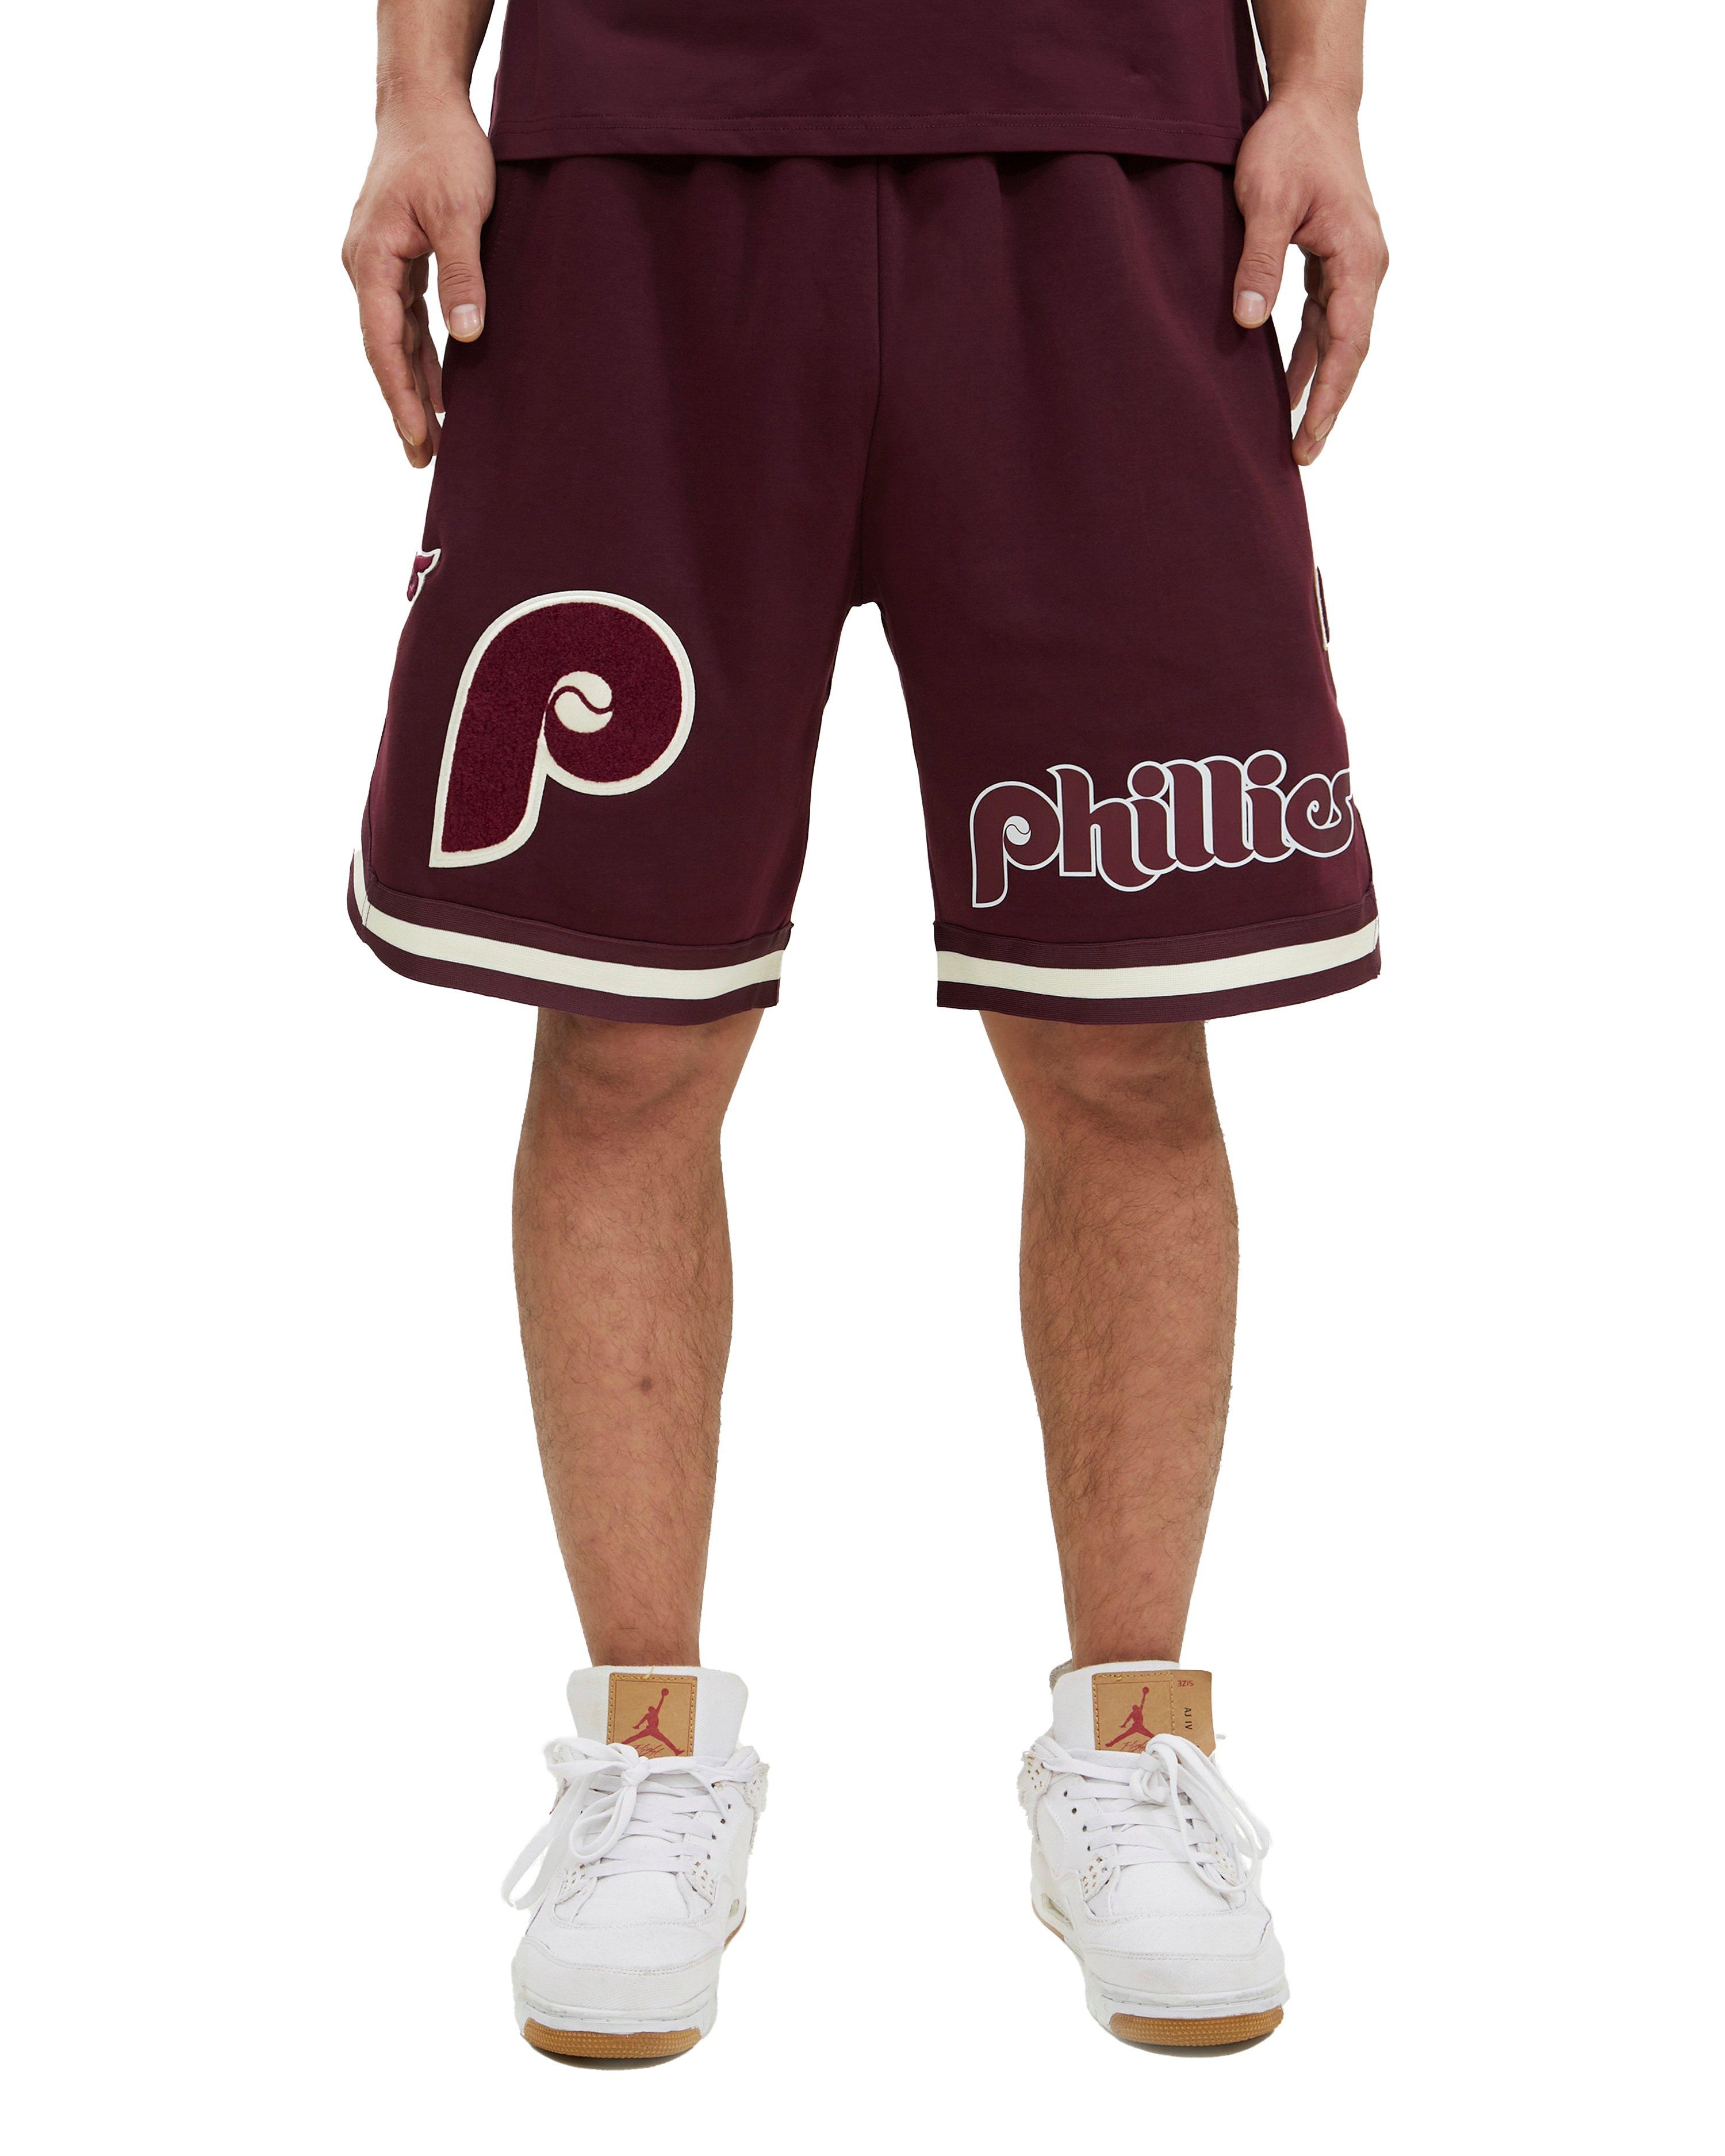 Mitchell & Ness Philadelphia Phillies Retro Shorts